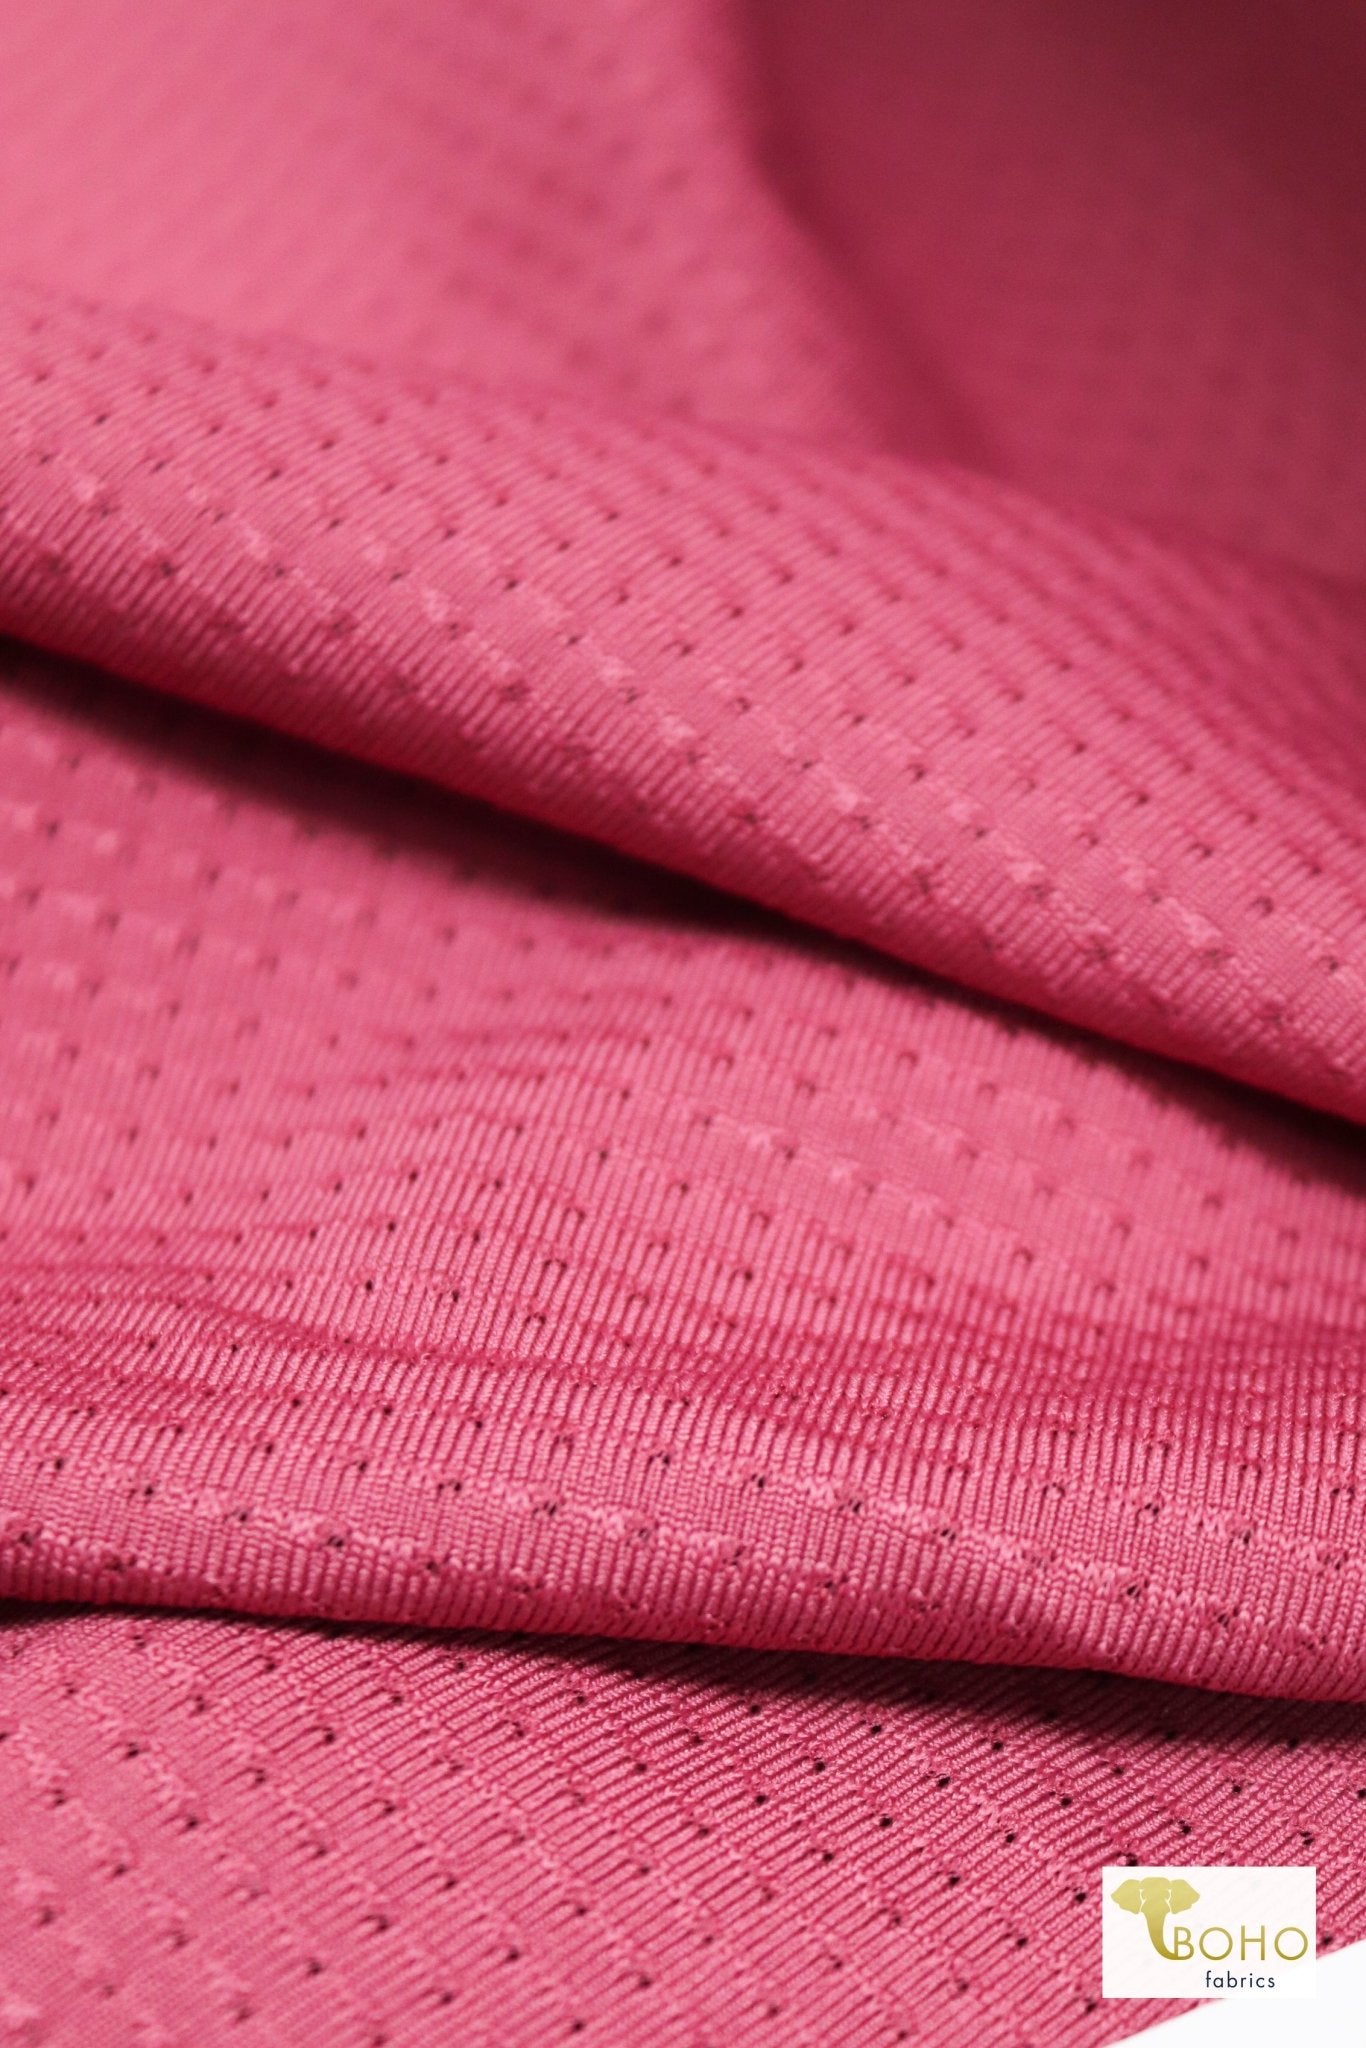 Rose Pink Laser Cut, Athletic Mesh - Boho Fabrics